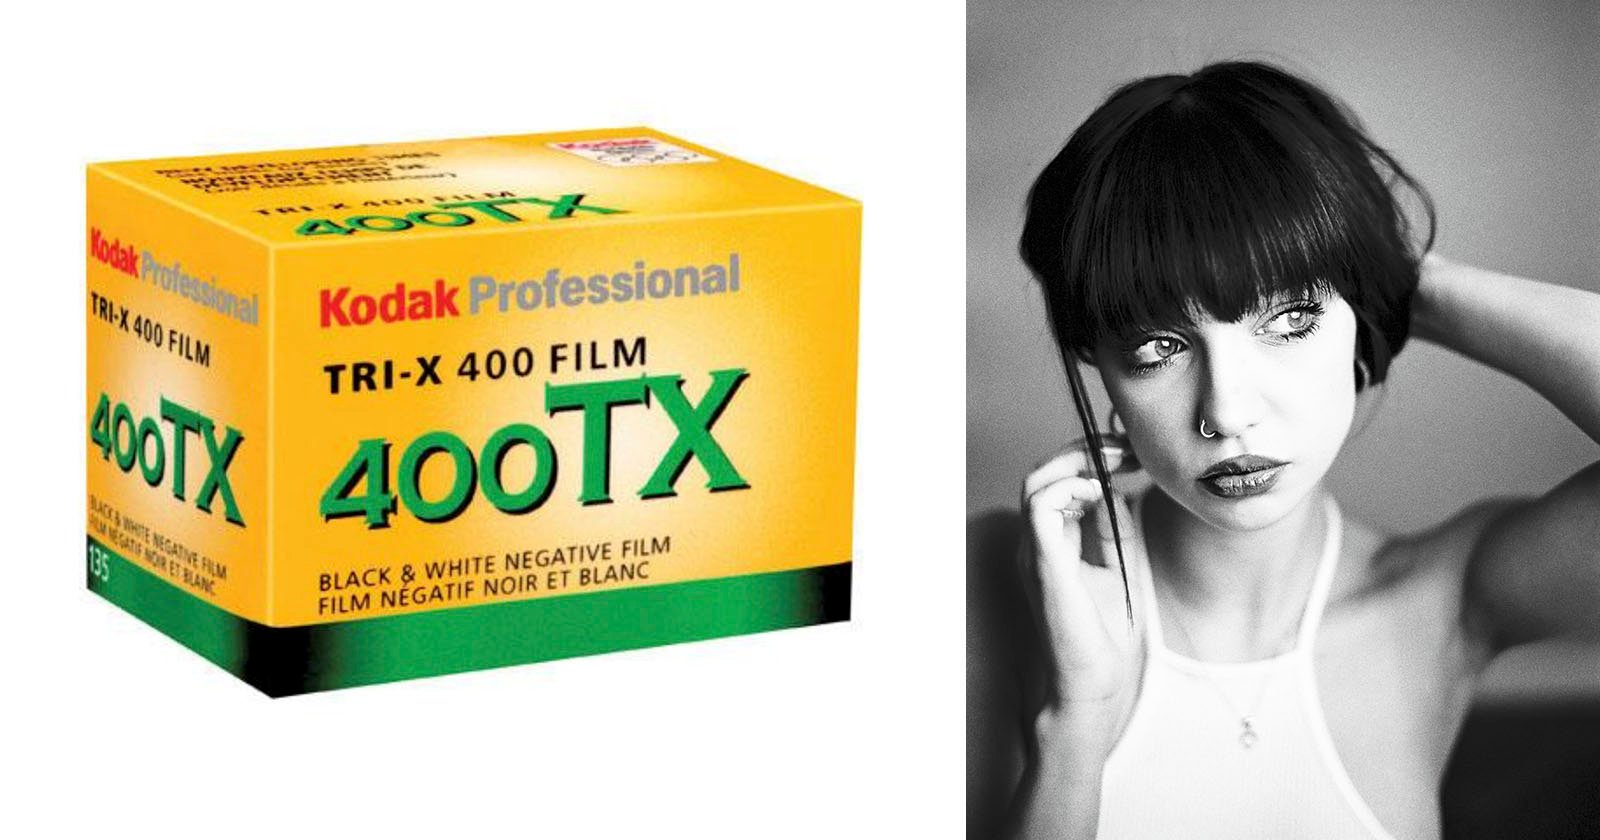  kodak cuts iconic tri-x black-and-white film prices 